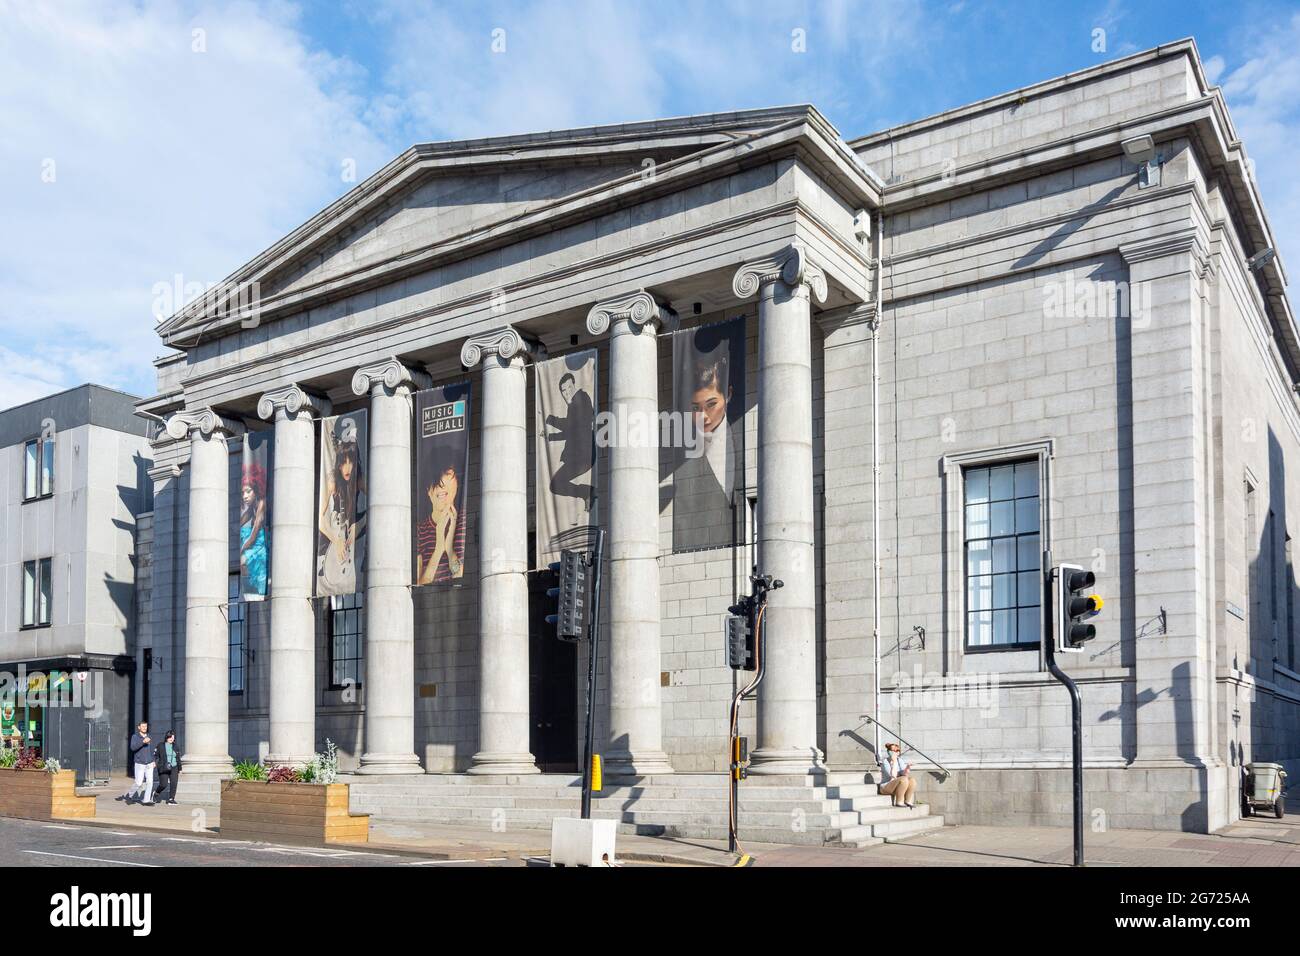 Aberdeen Performing Arts, Music Hall, Union Street, City of Aberdeen, Aberdeenshire, Scotland, United Kingdom Stock Photo